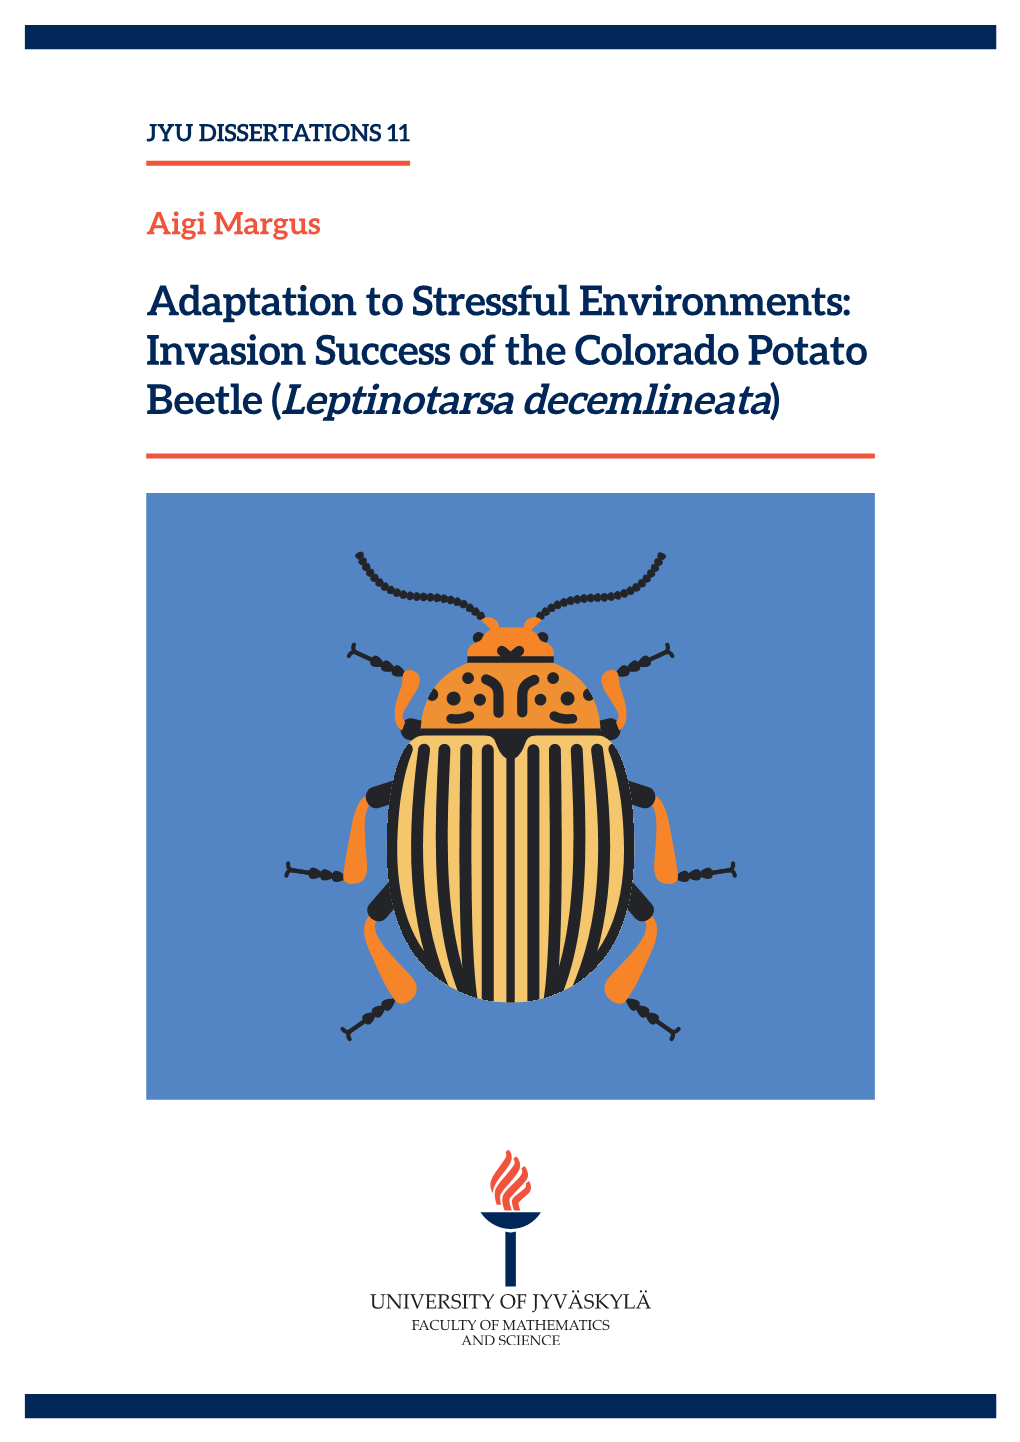 Invasion Success of the Colorado Potato Beetle (Leptinotarsa Decemlineata) JYU DISSERTATIONS 11